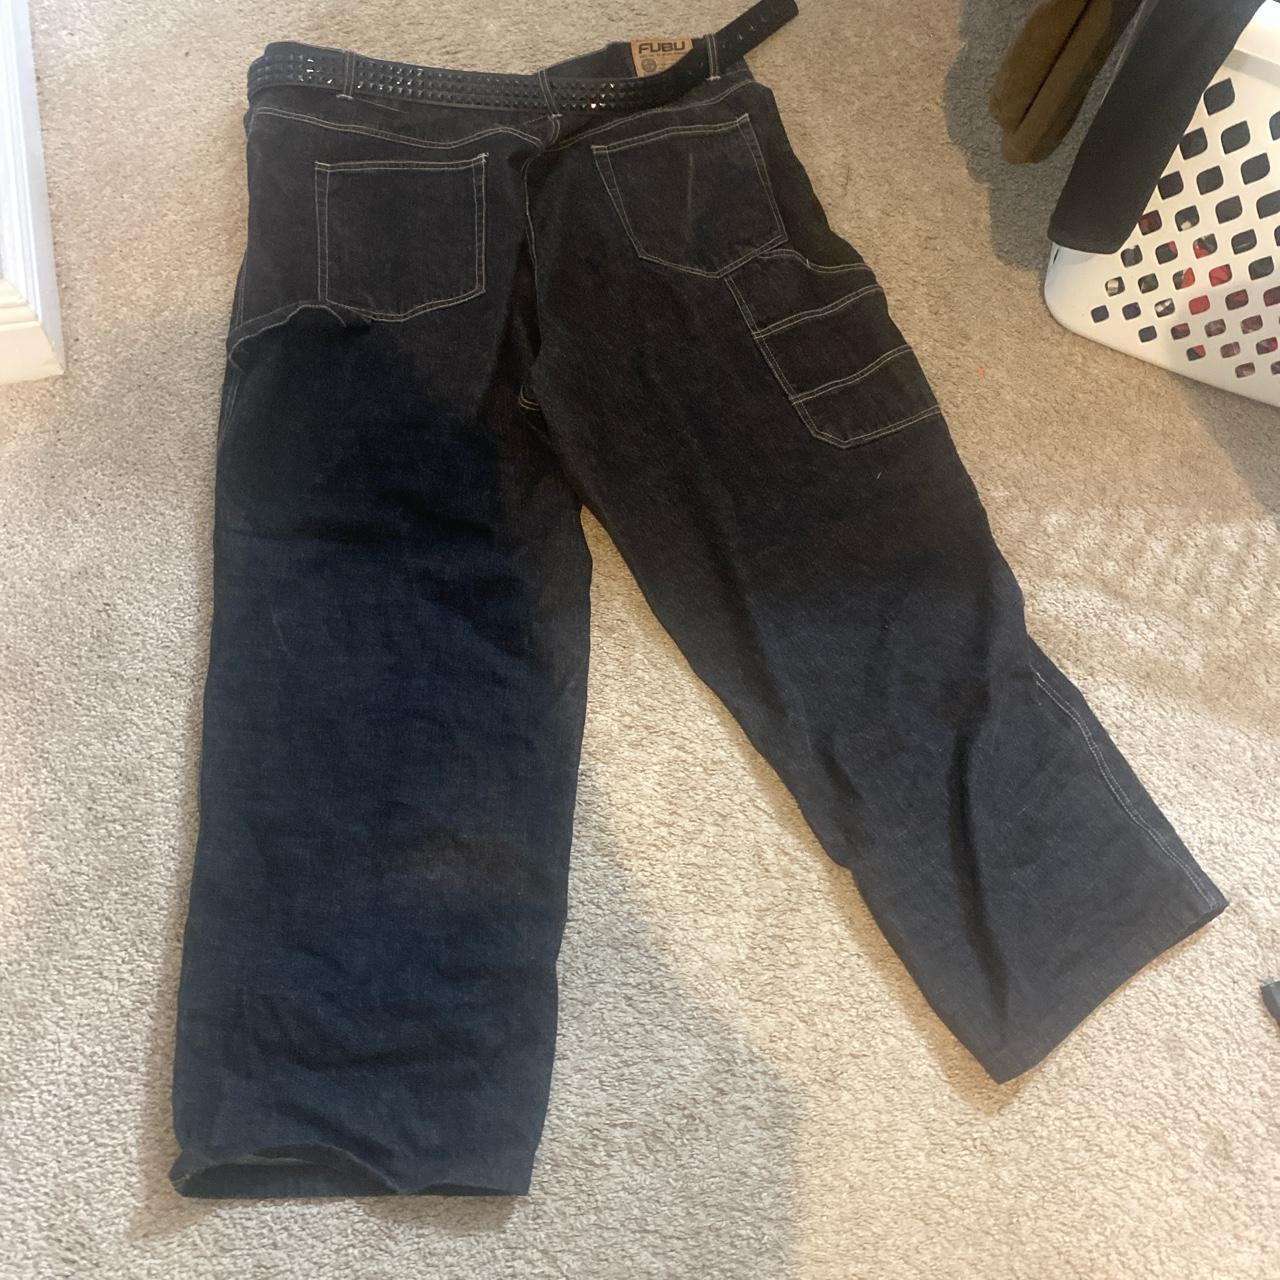 Really baggy jeans FUBU Waist size 50 - Depop